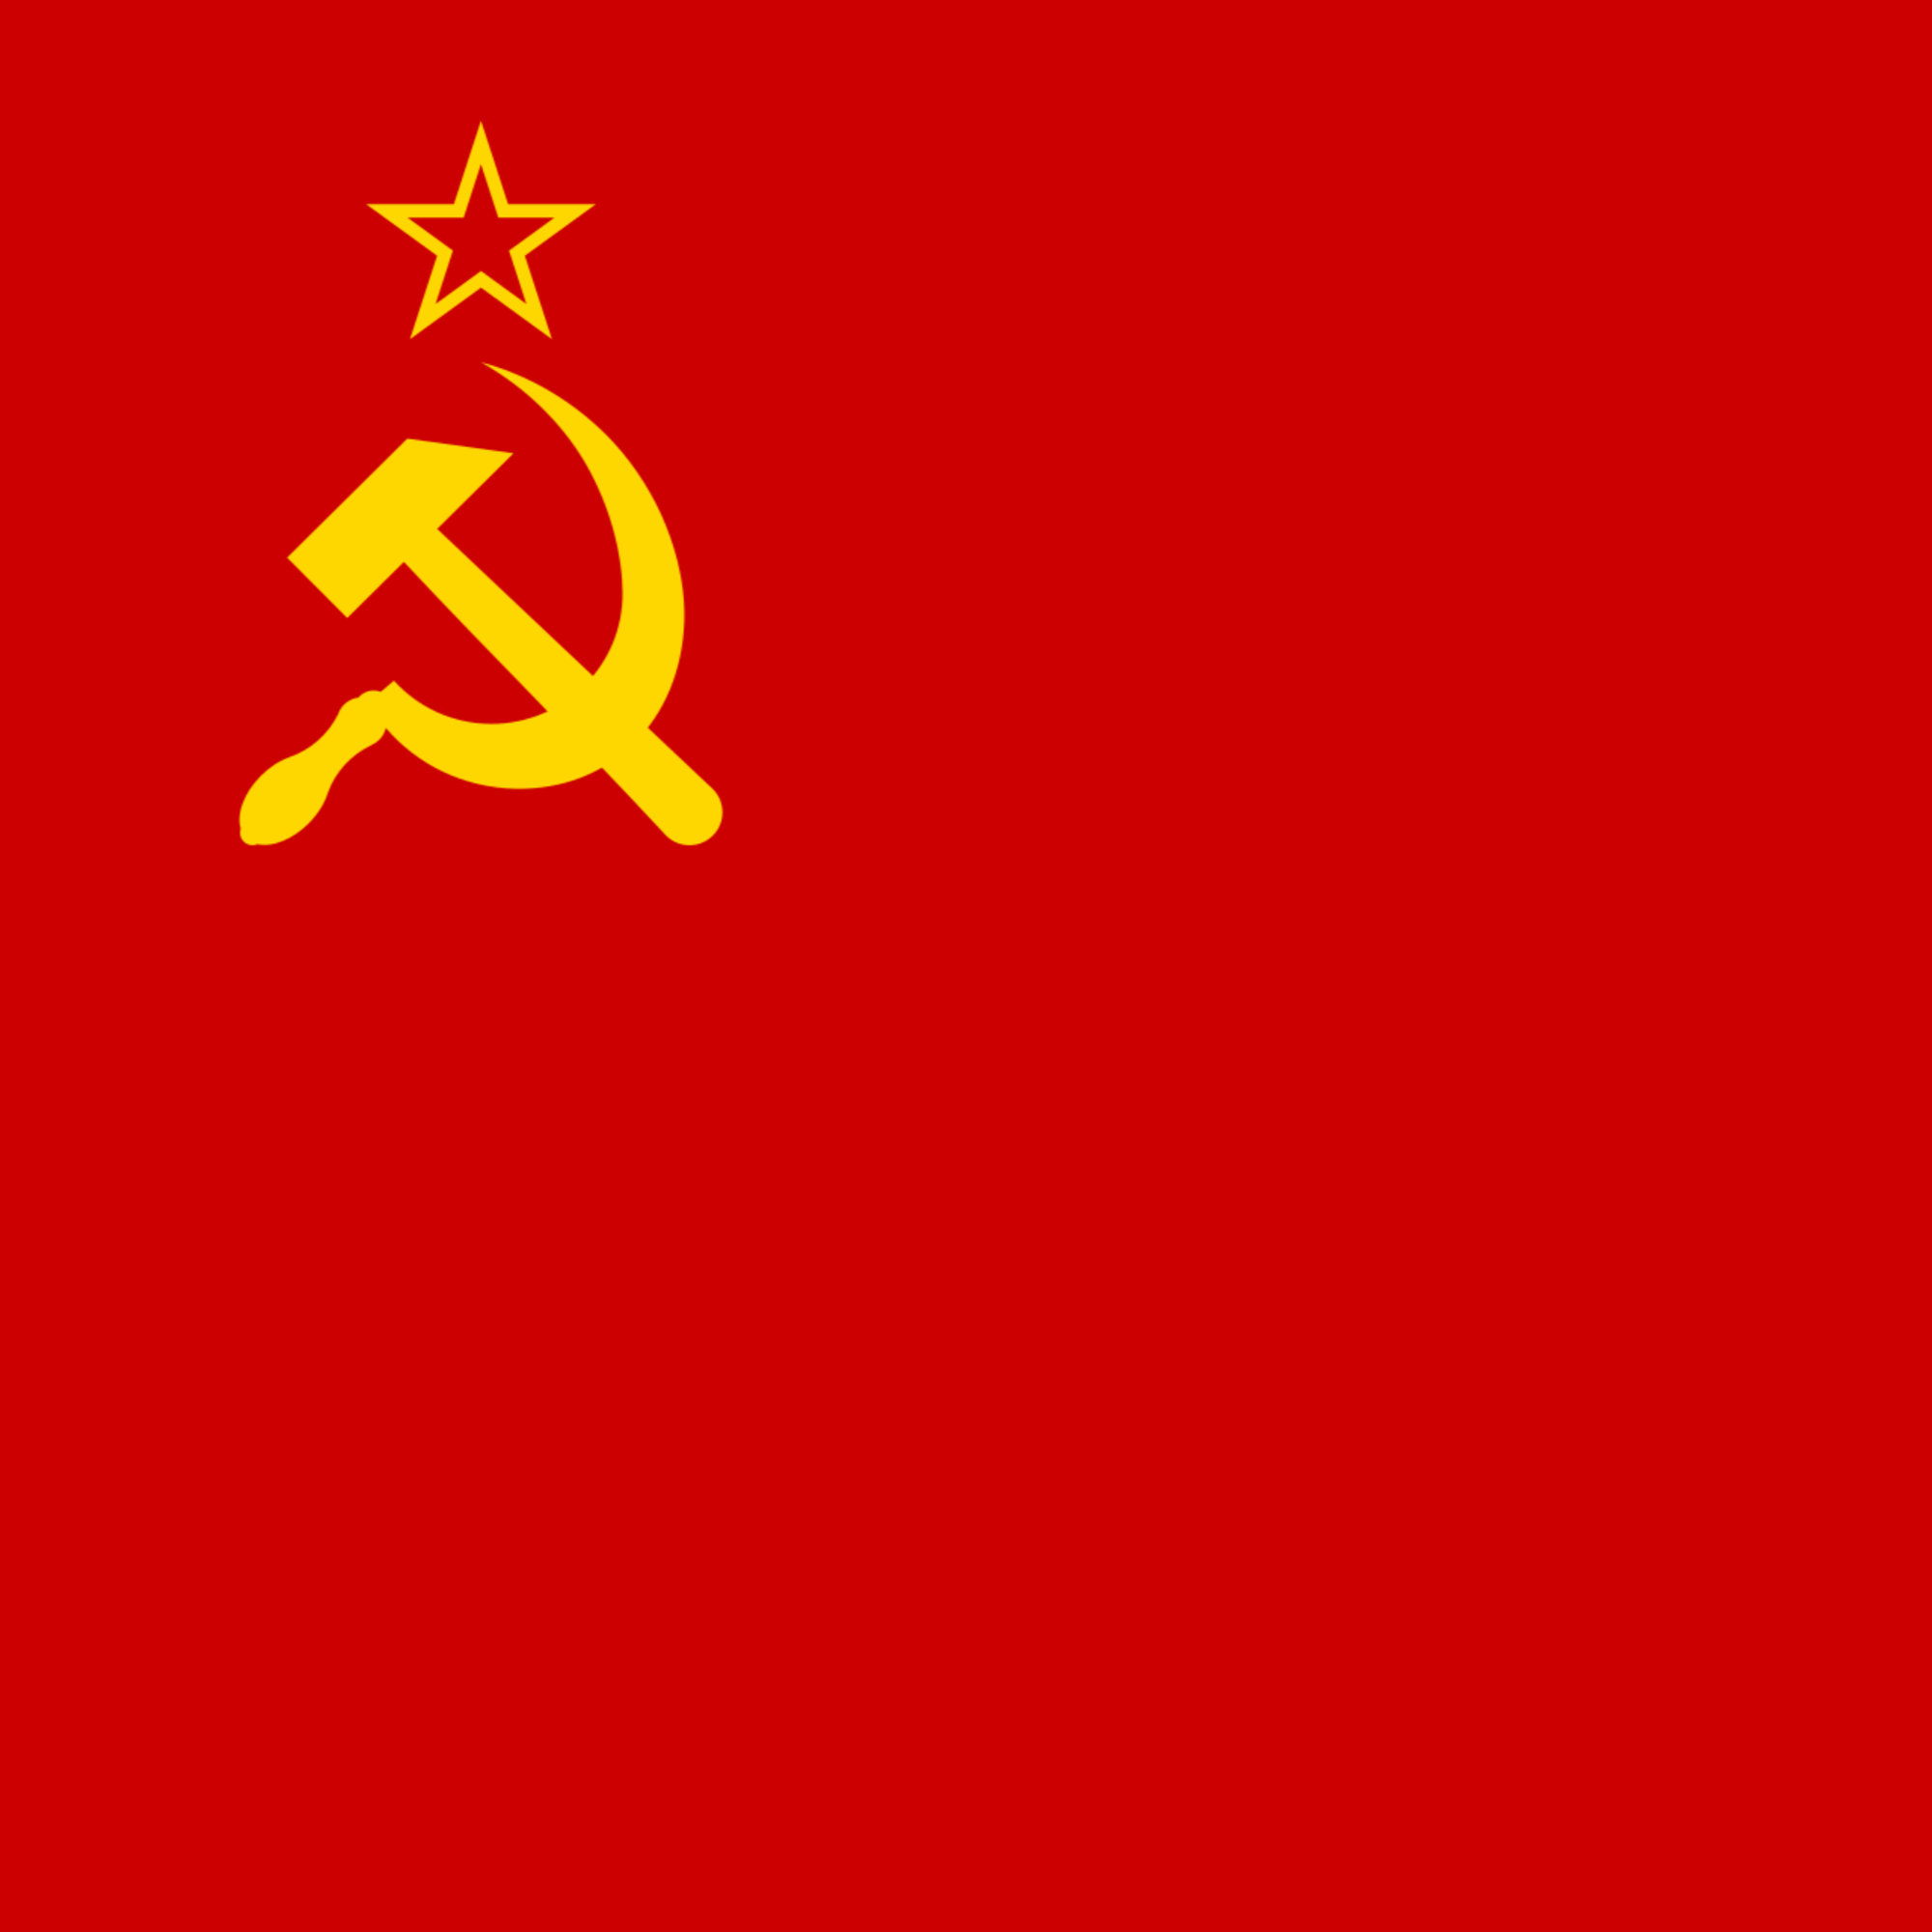 Russia/USSR